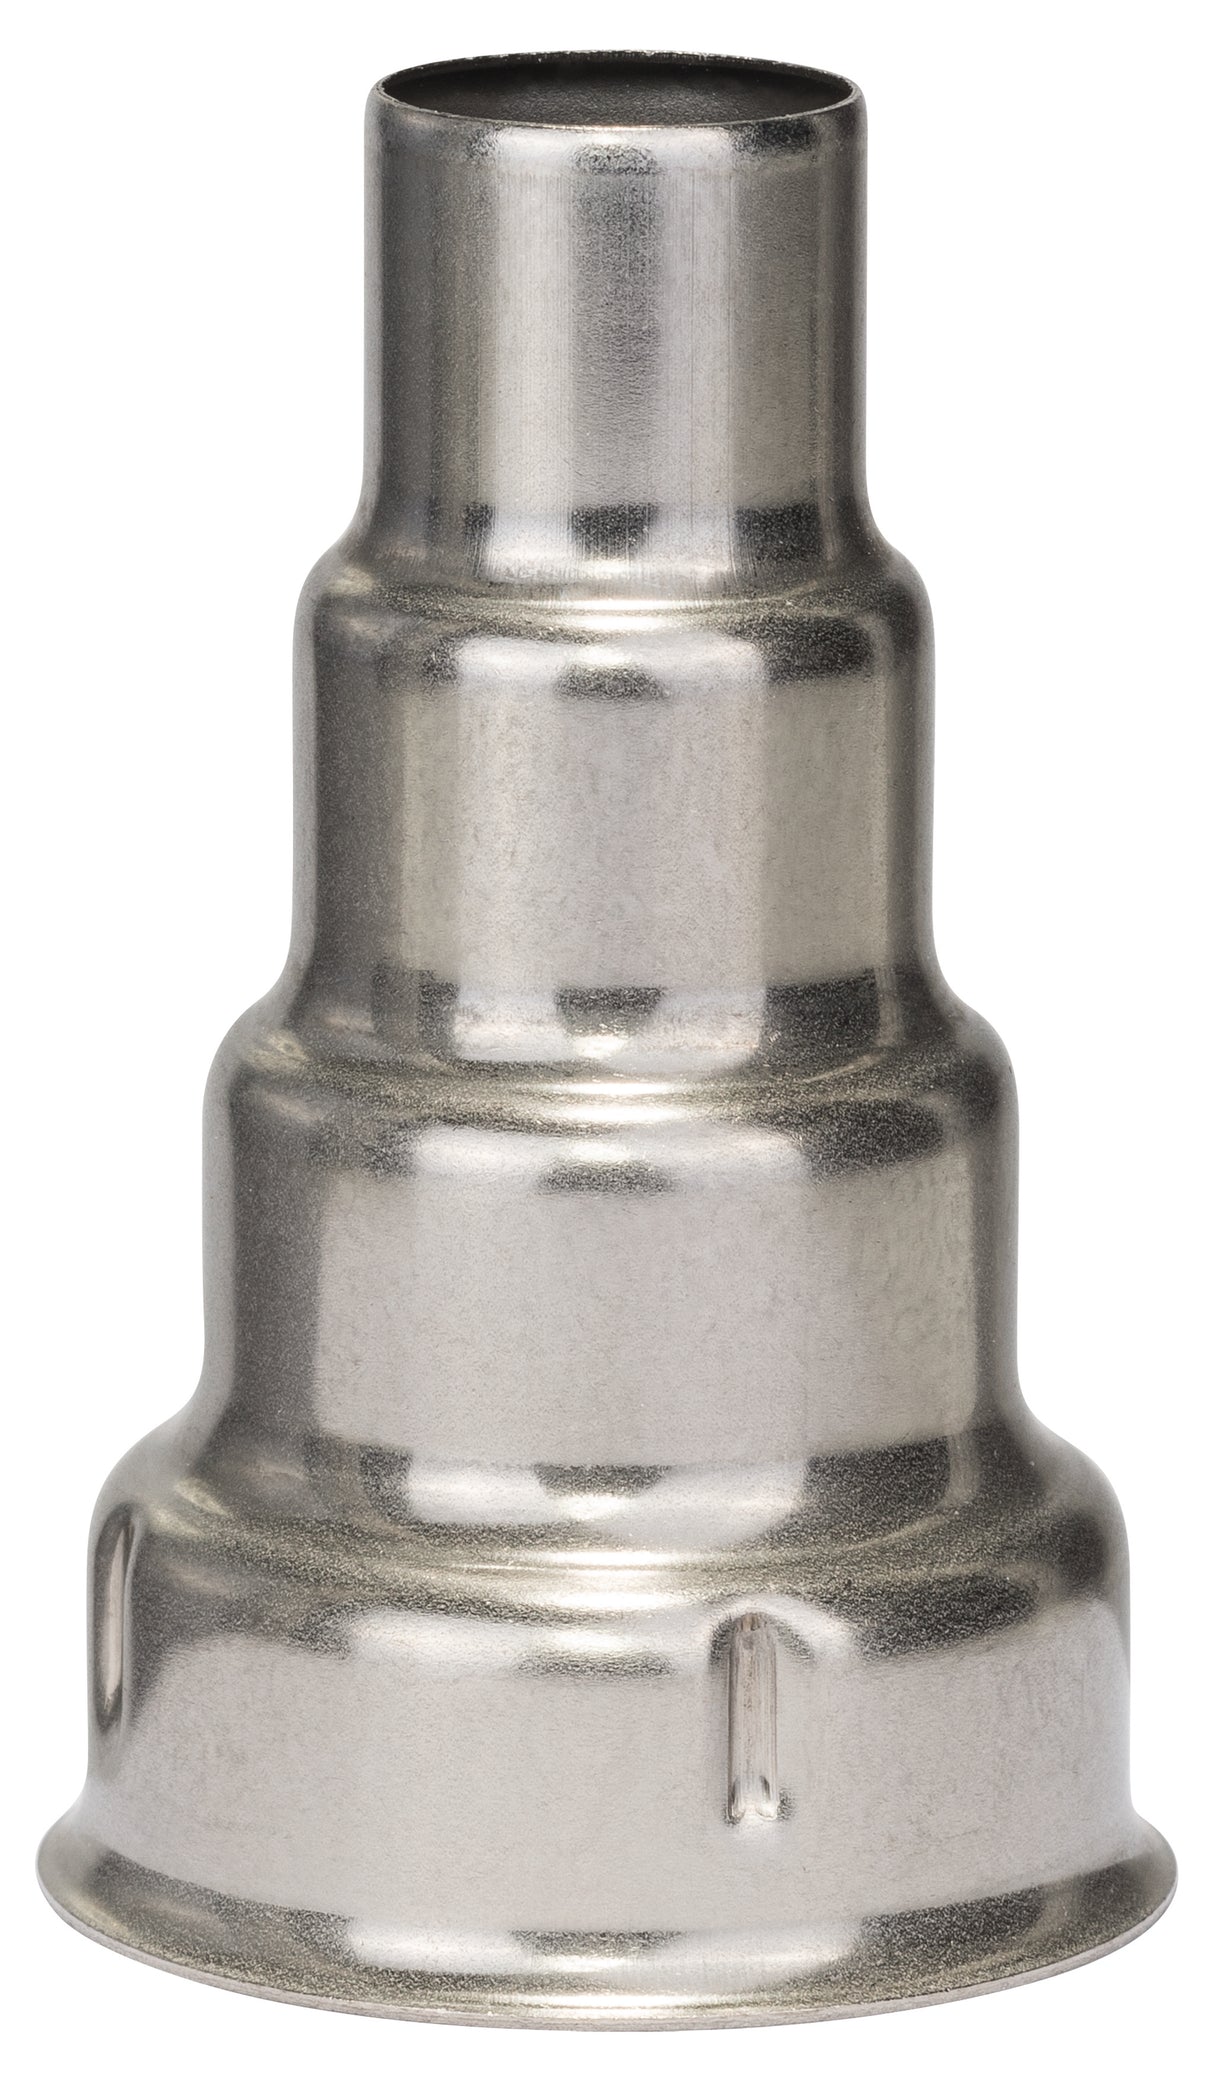 Bosch Professional 14mm Reduction Nozzle